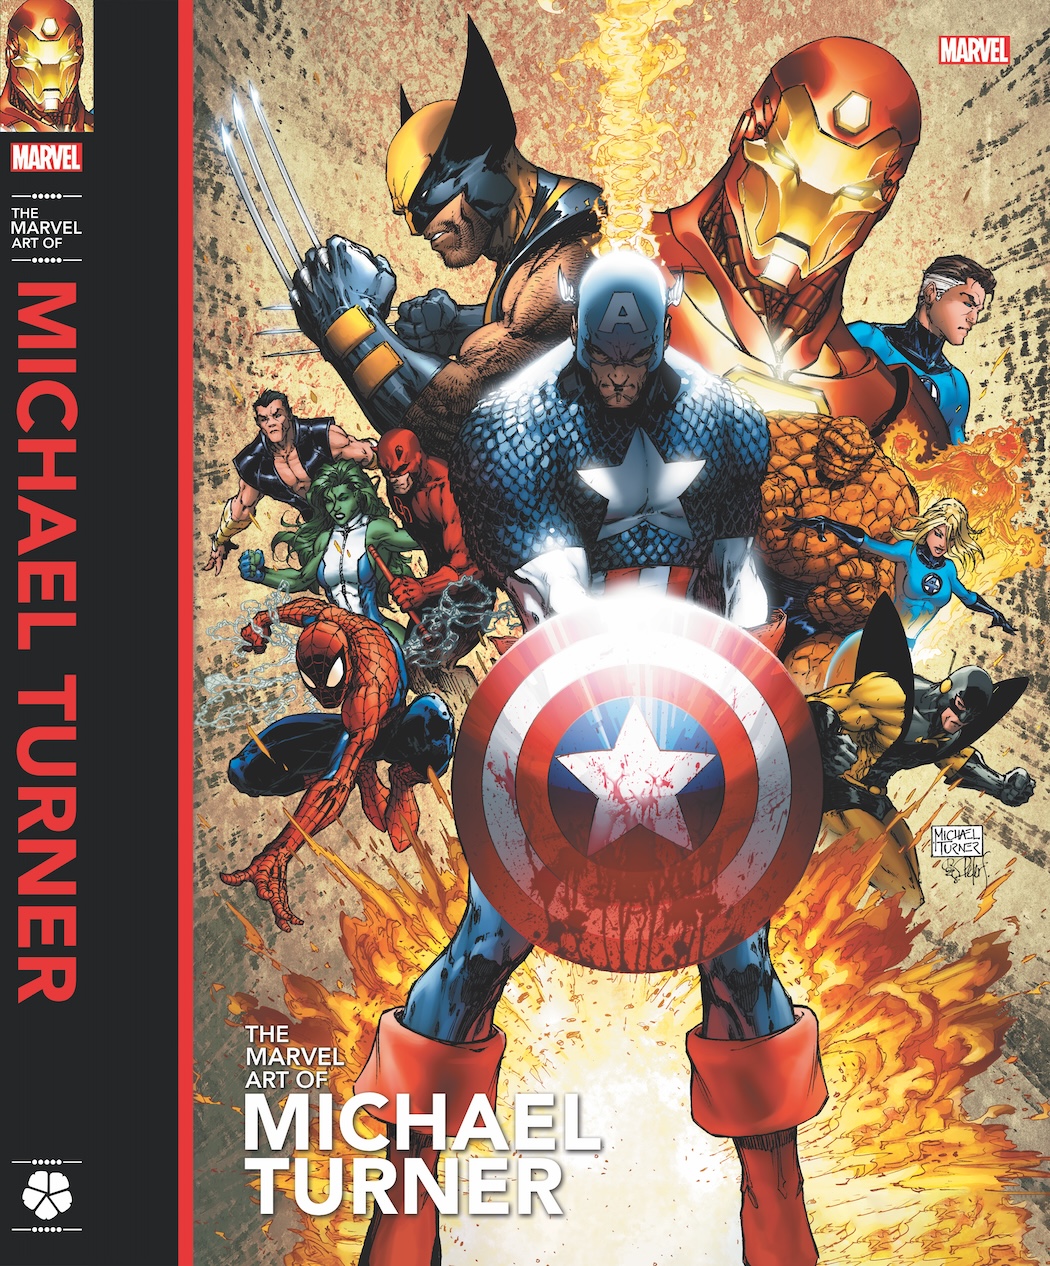 Kickstarter Alert: The Marvel Art of Michael Turner - exclusive sticker reveal